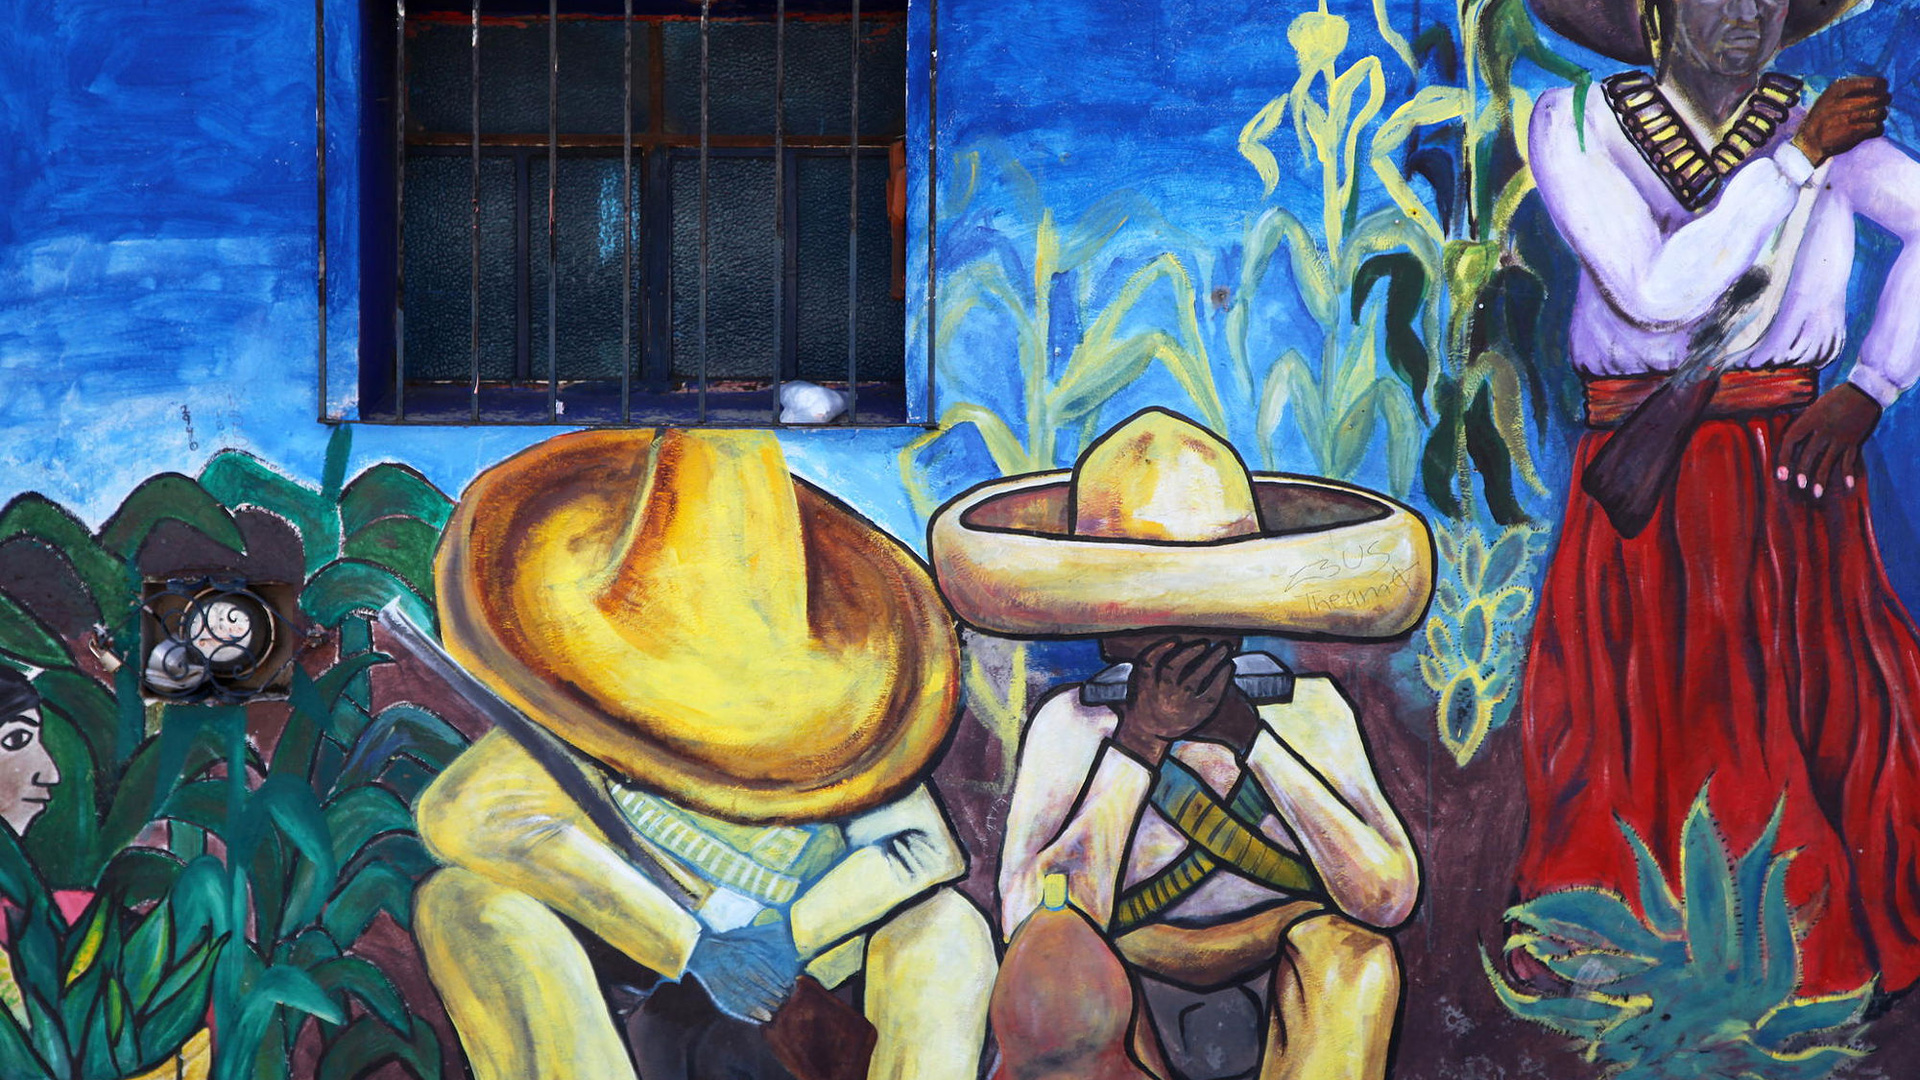 Graffiti, Mexicans, Street Art, Graffiti Art, Mexican